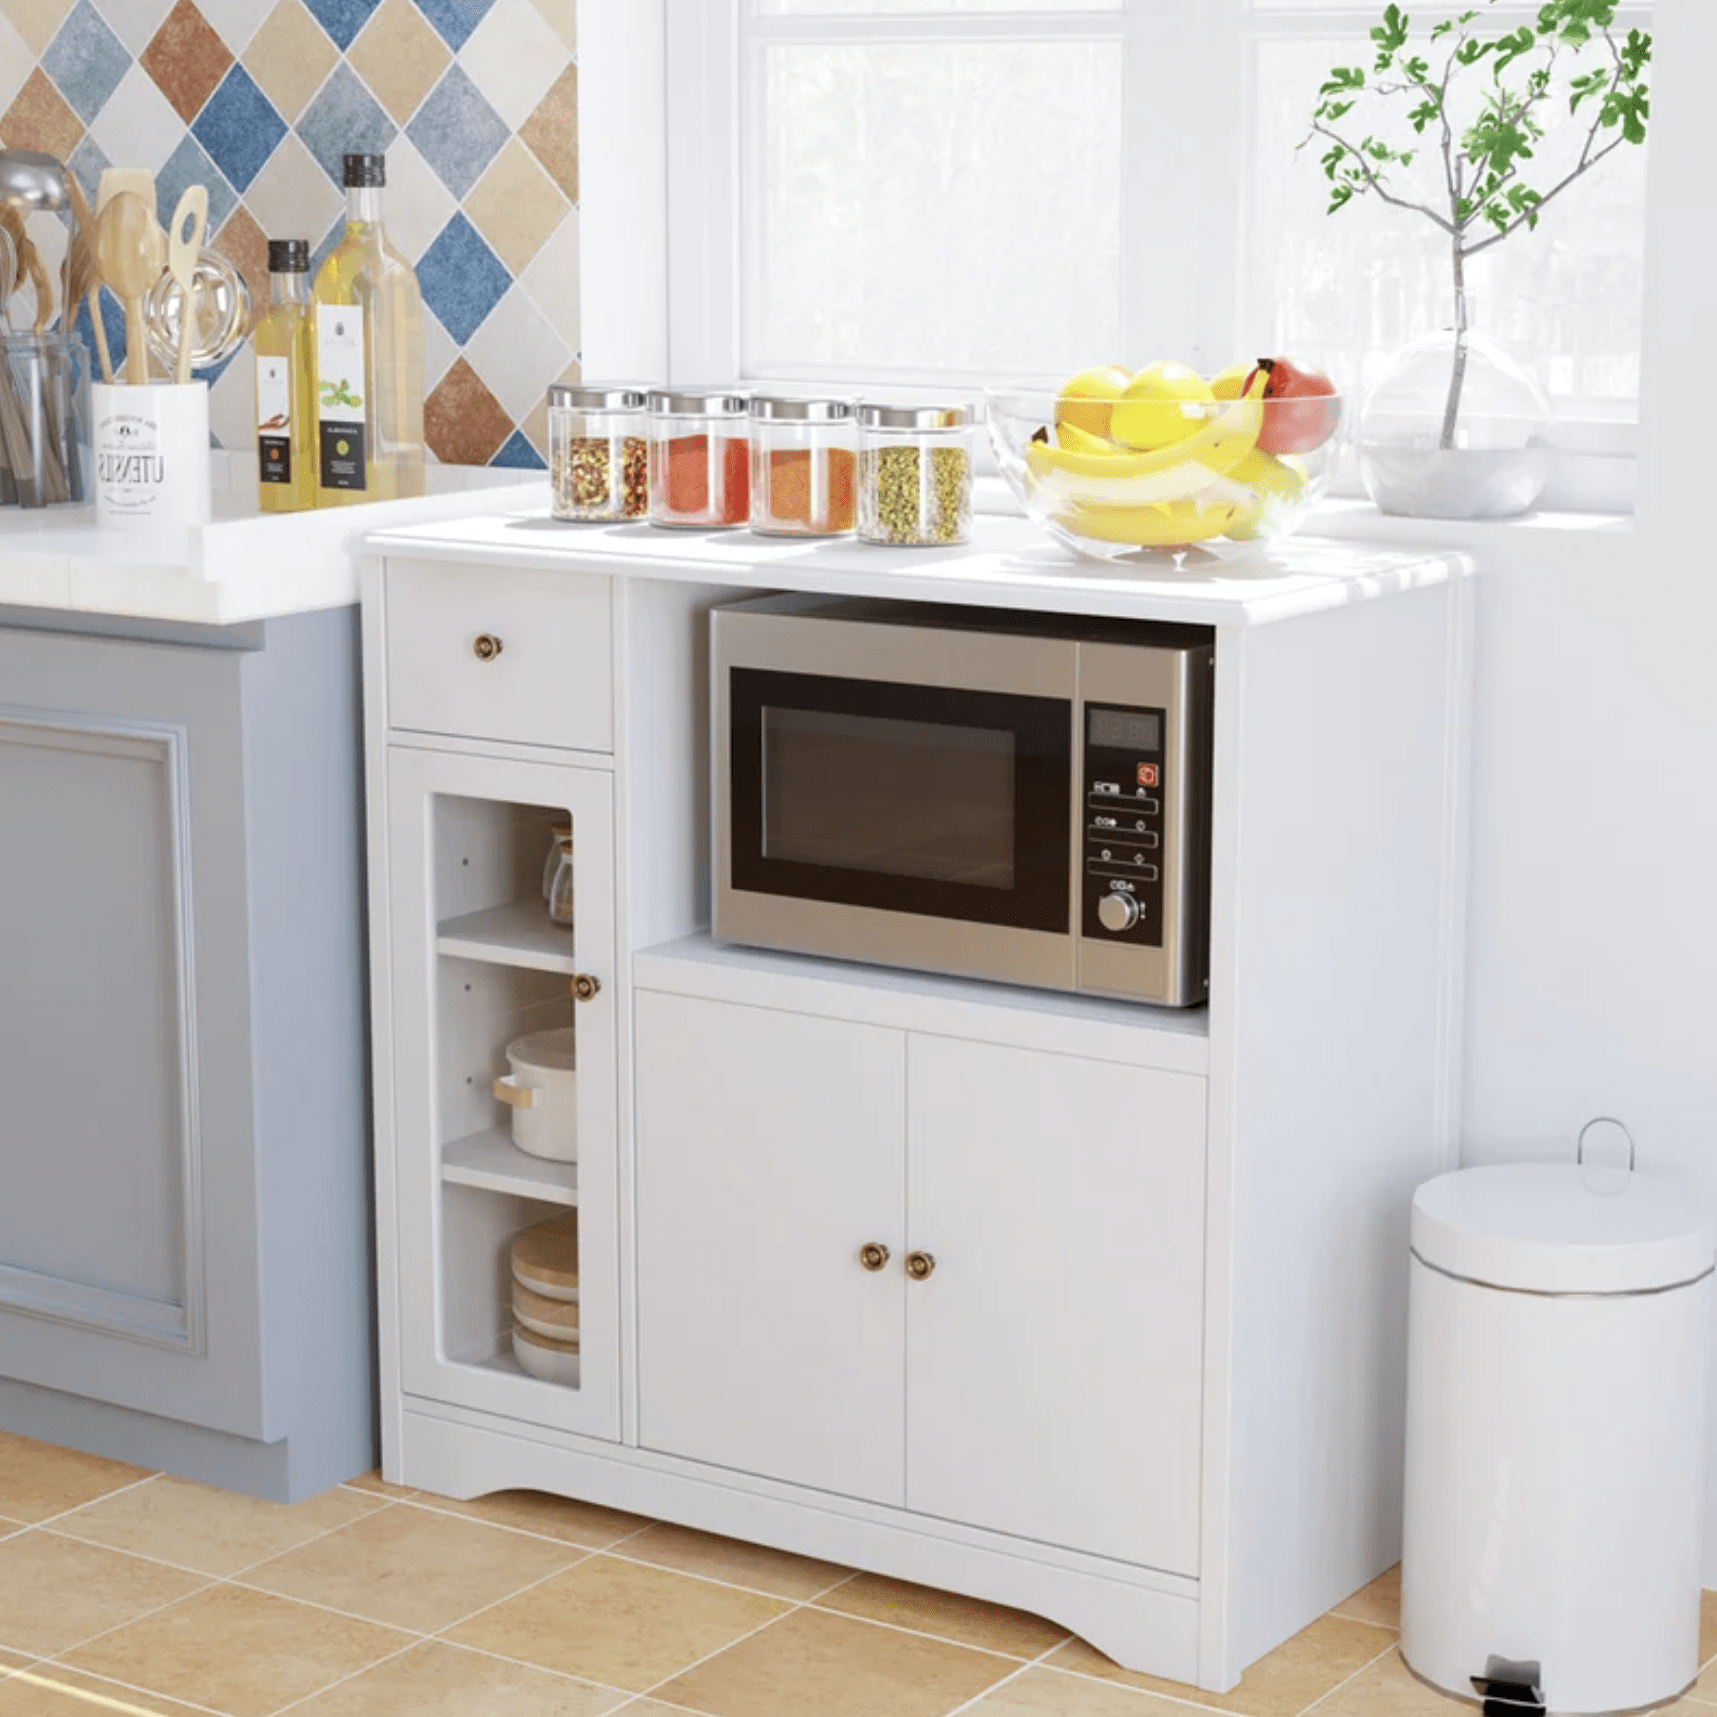 Extra kitchen storage  Home diy, Free standing kitchen cabinets, Tv armoire